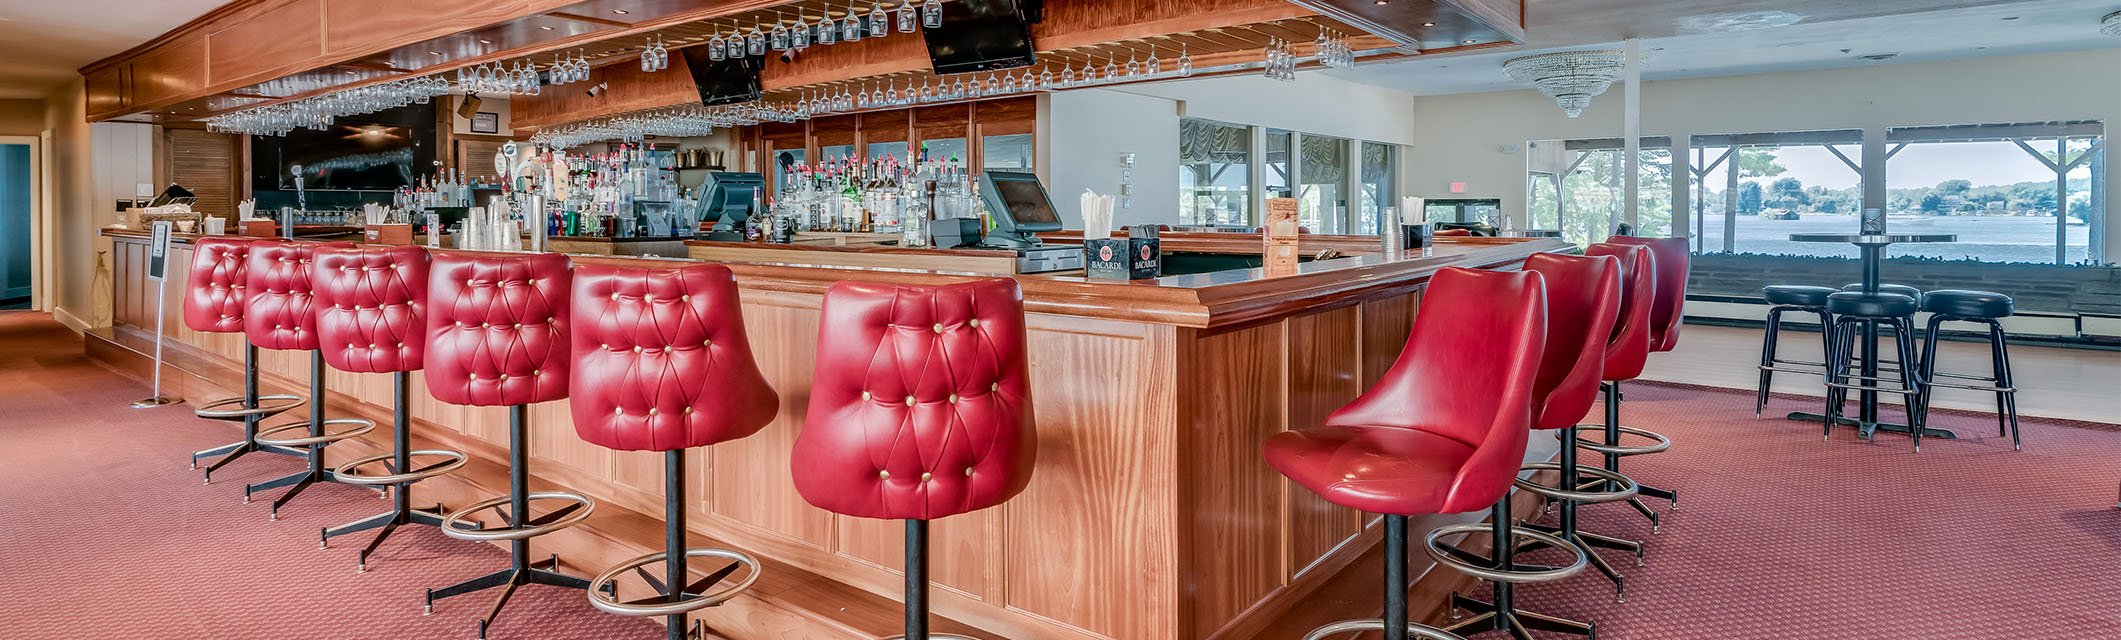 red bar stools around a bar